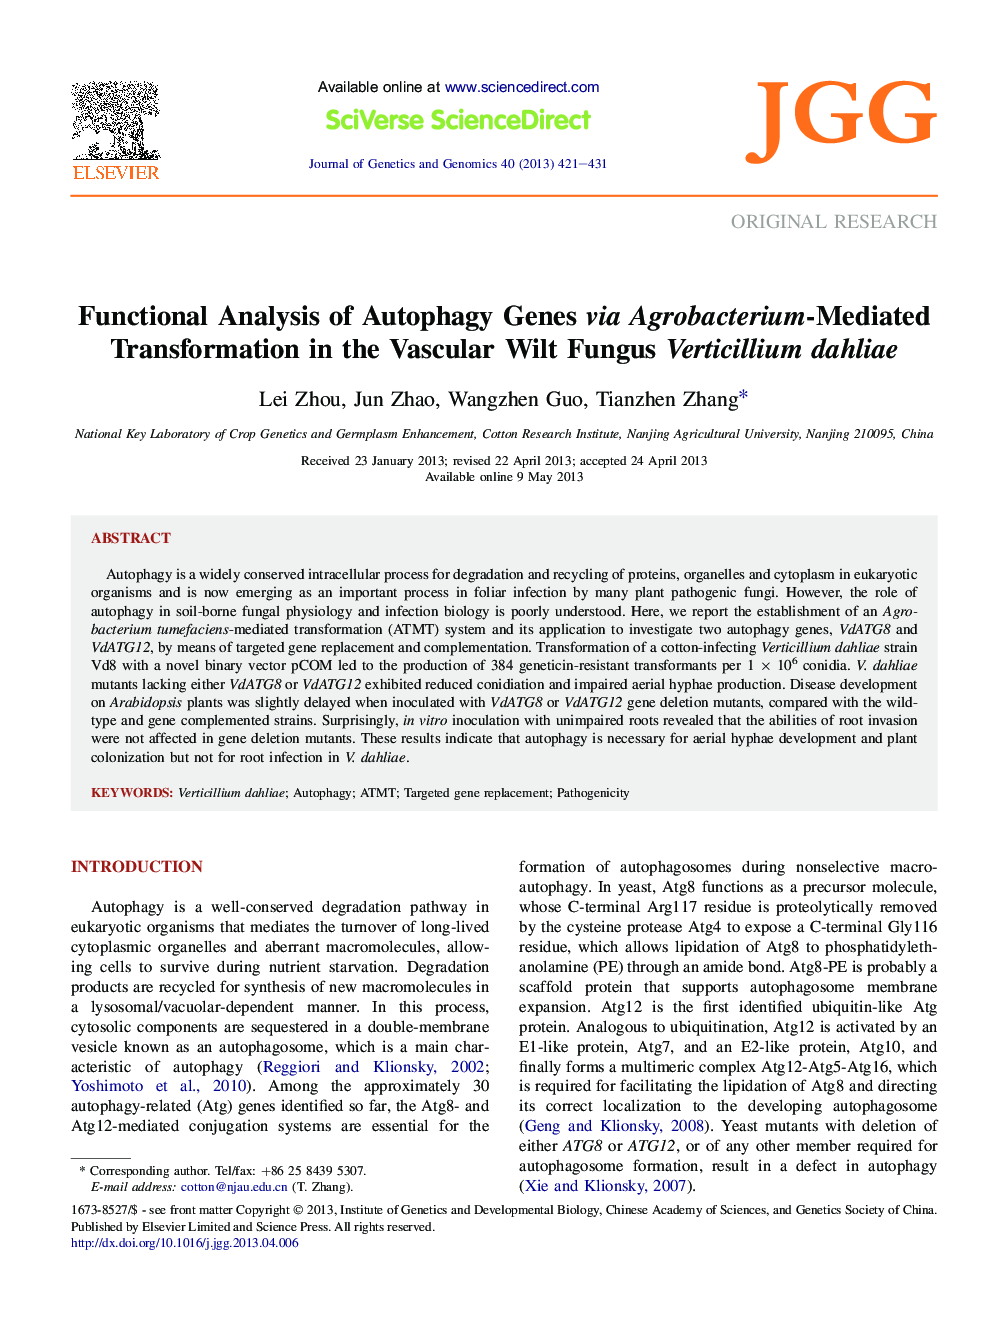 Functional Analysis of Autophagy Genes via Agrobacterium-Mediated Transformation in the Vascular Wilt Fungus Verticillium dahliae